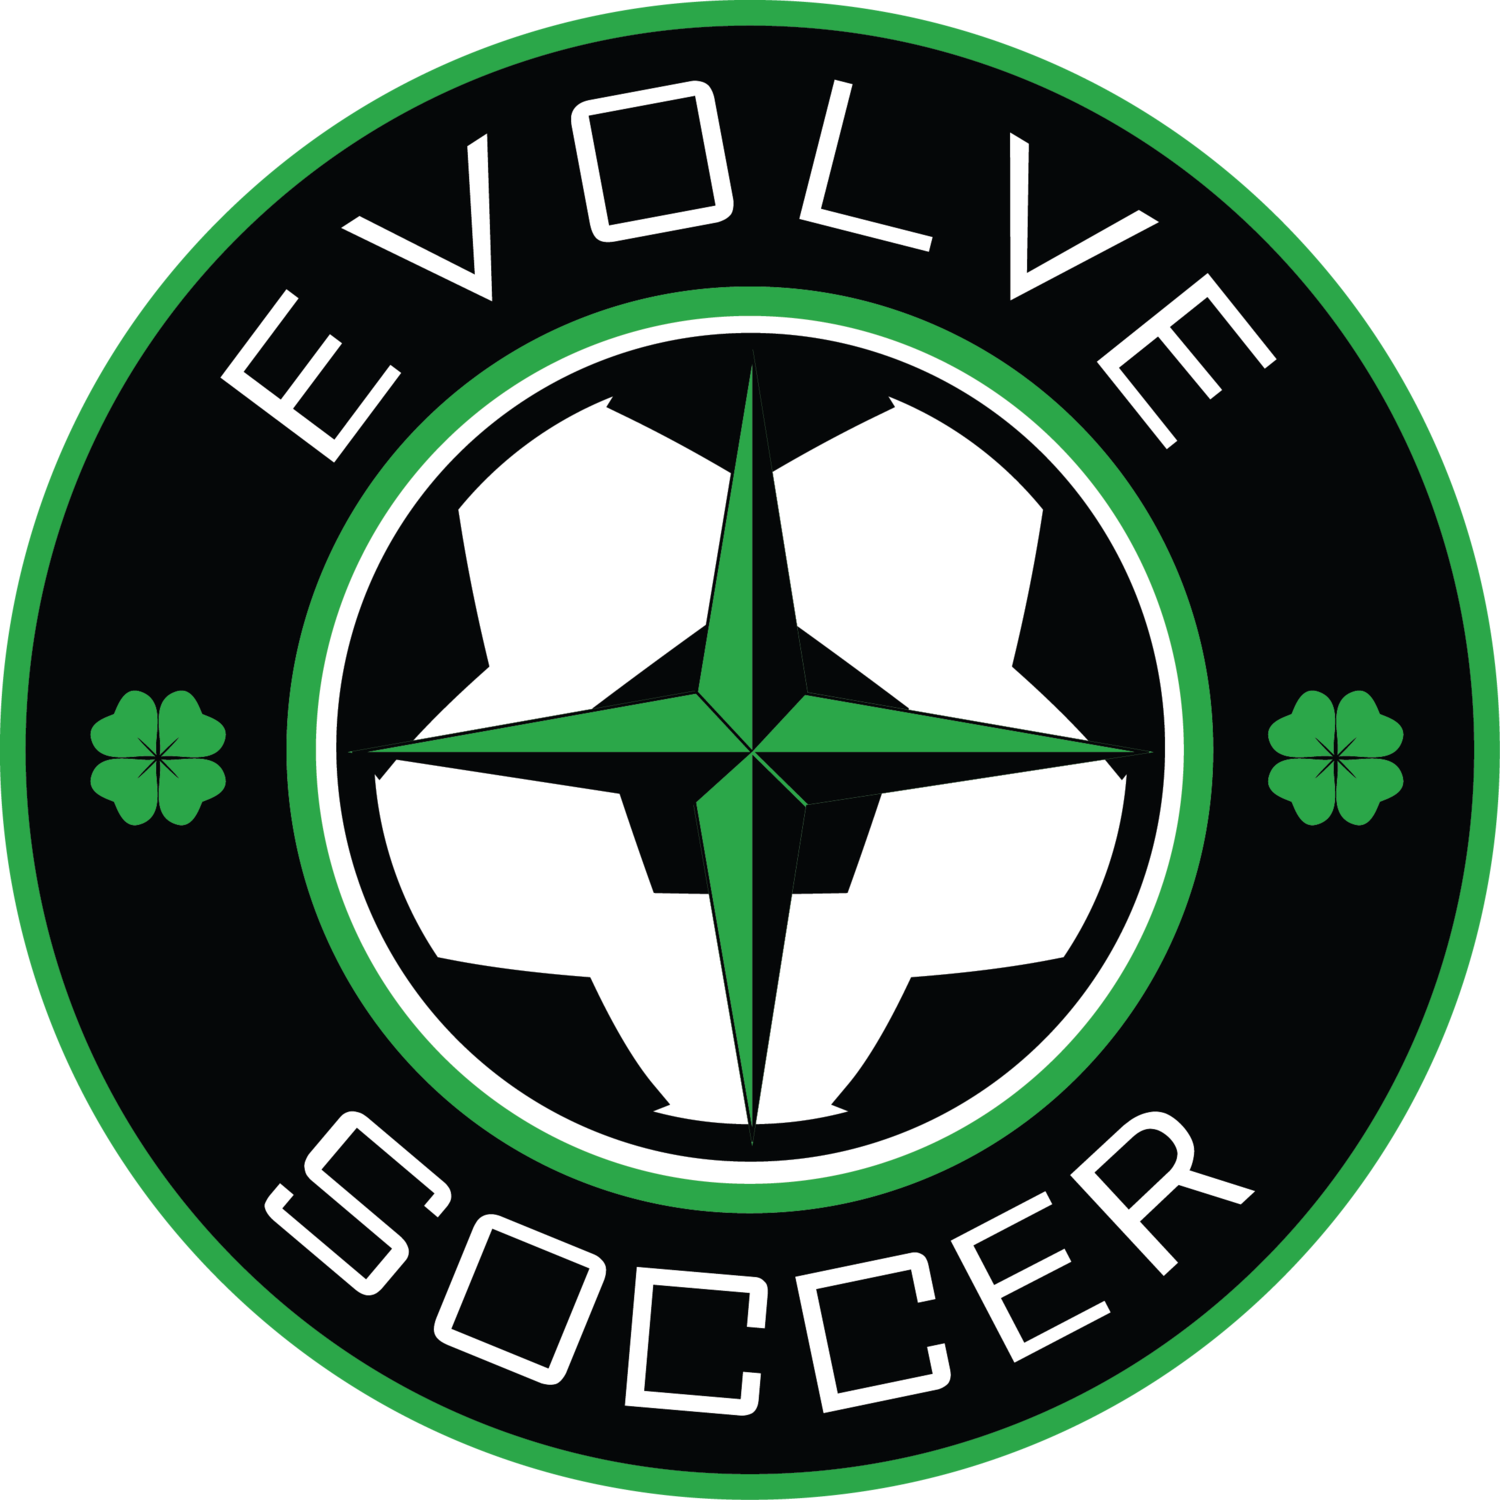 Evolve Soccer